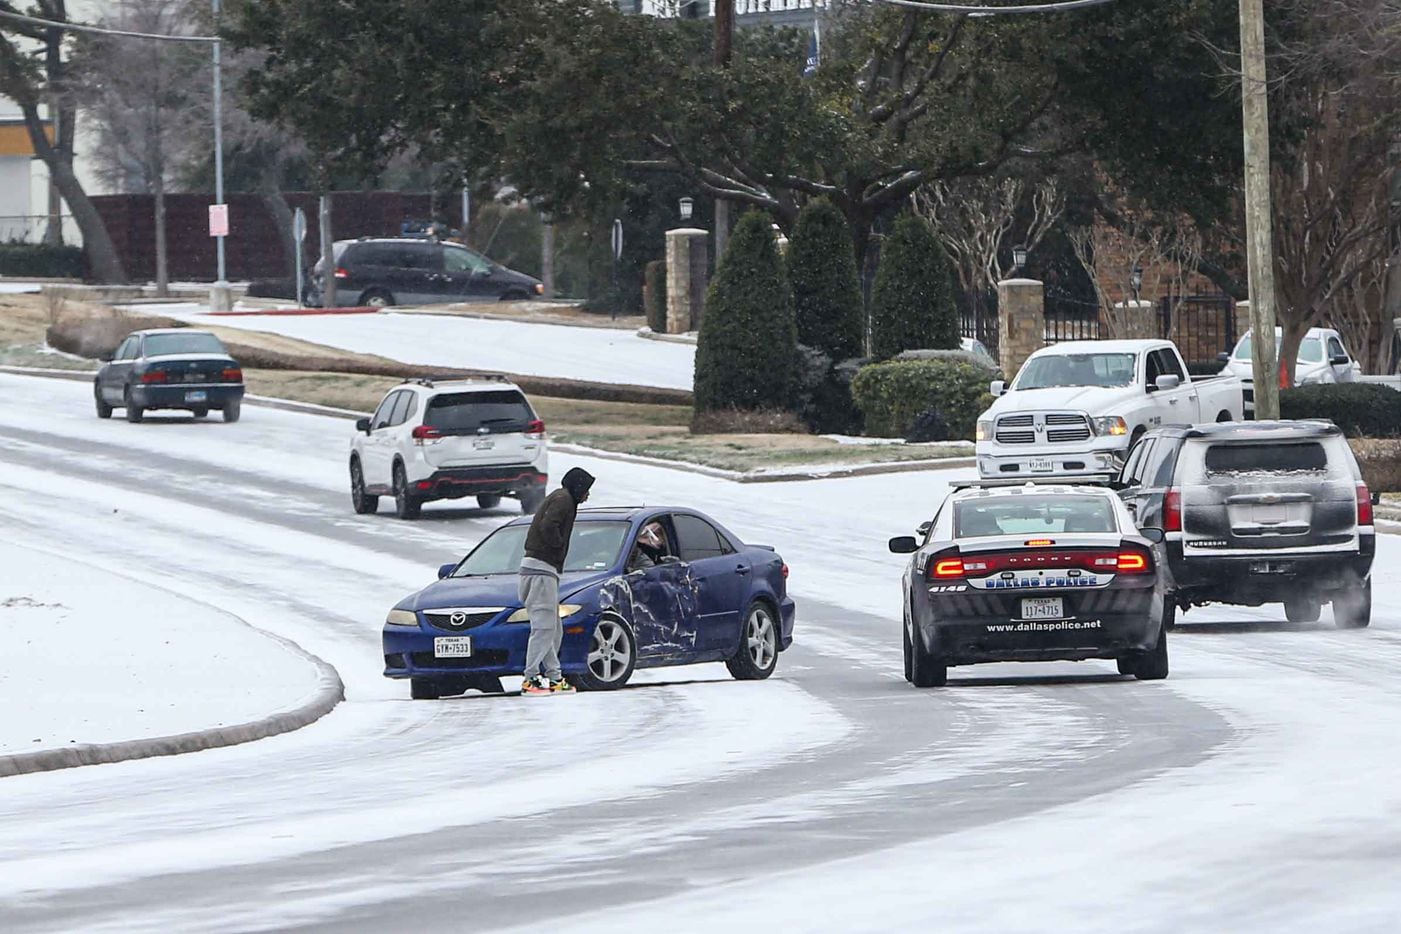 A car crash on TX-12 Loop Northwest near Shady Brook Ln as winter flurries arrive in Dallas on Sunday, February 14, 2021 ahead of major snowstorm.